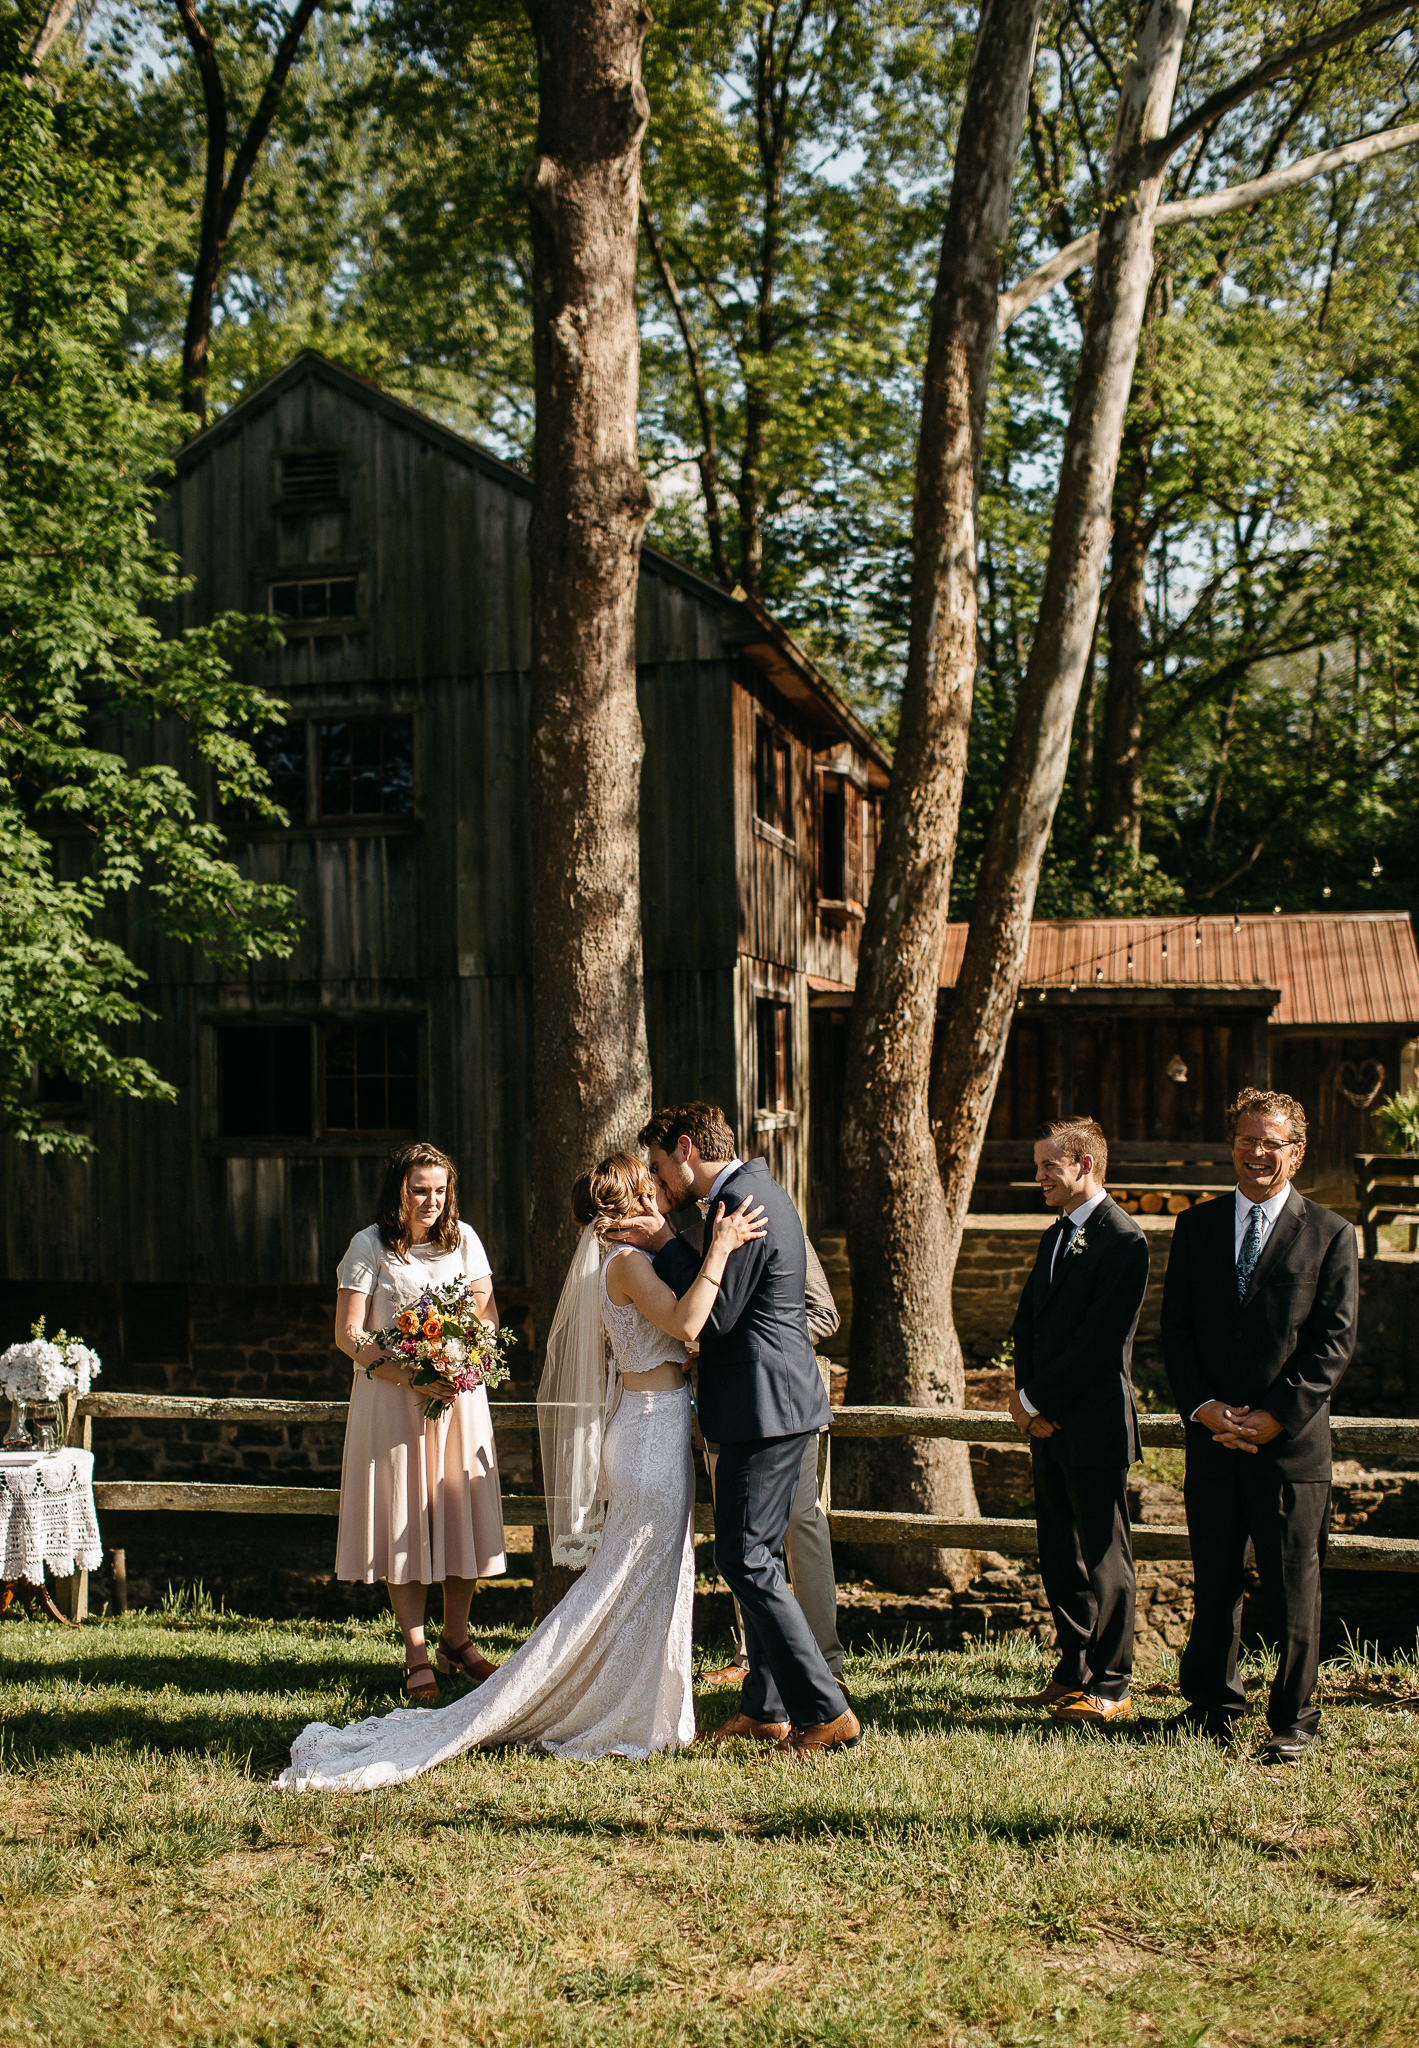 eastlyn bright intimate ohio backyard bohemian forest wedding photographer -61.jpg